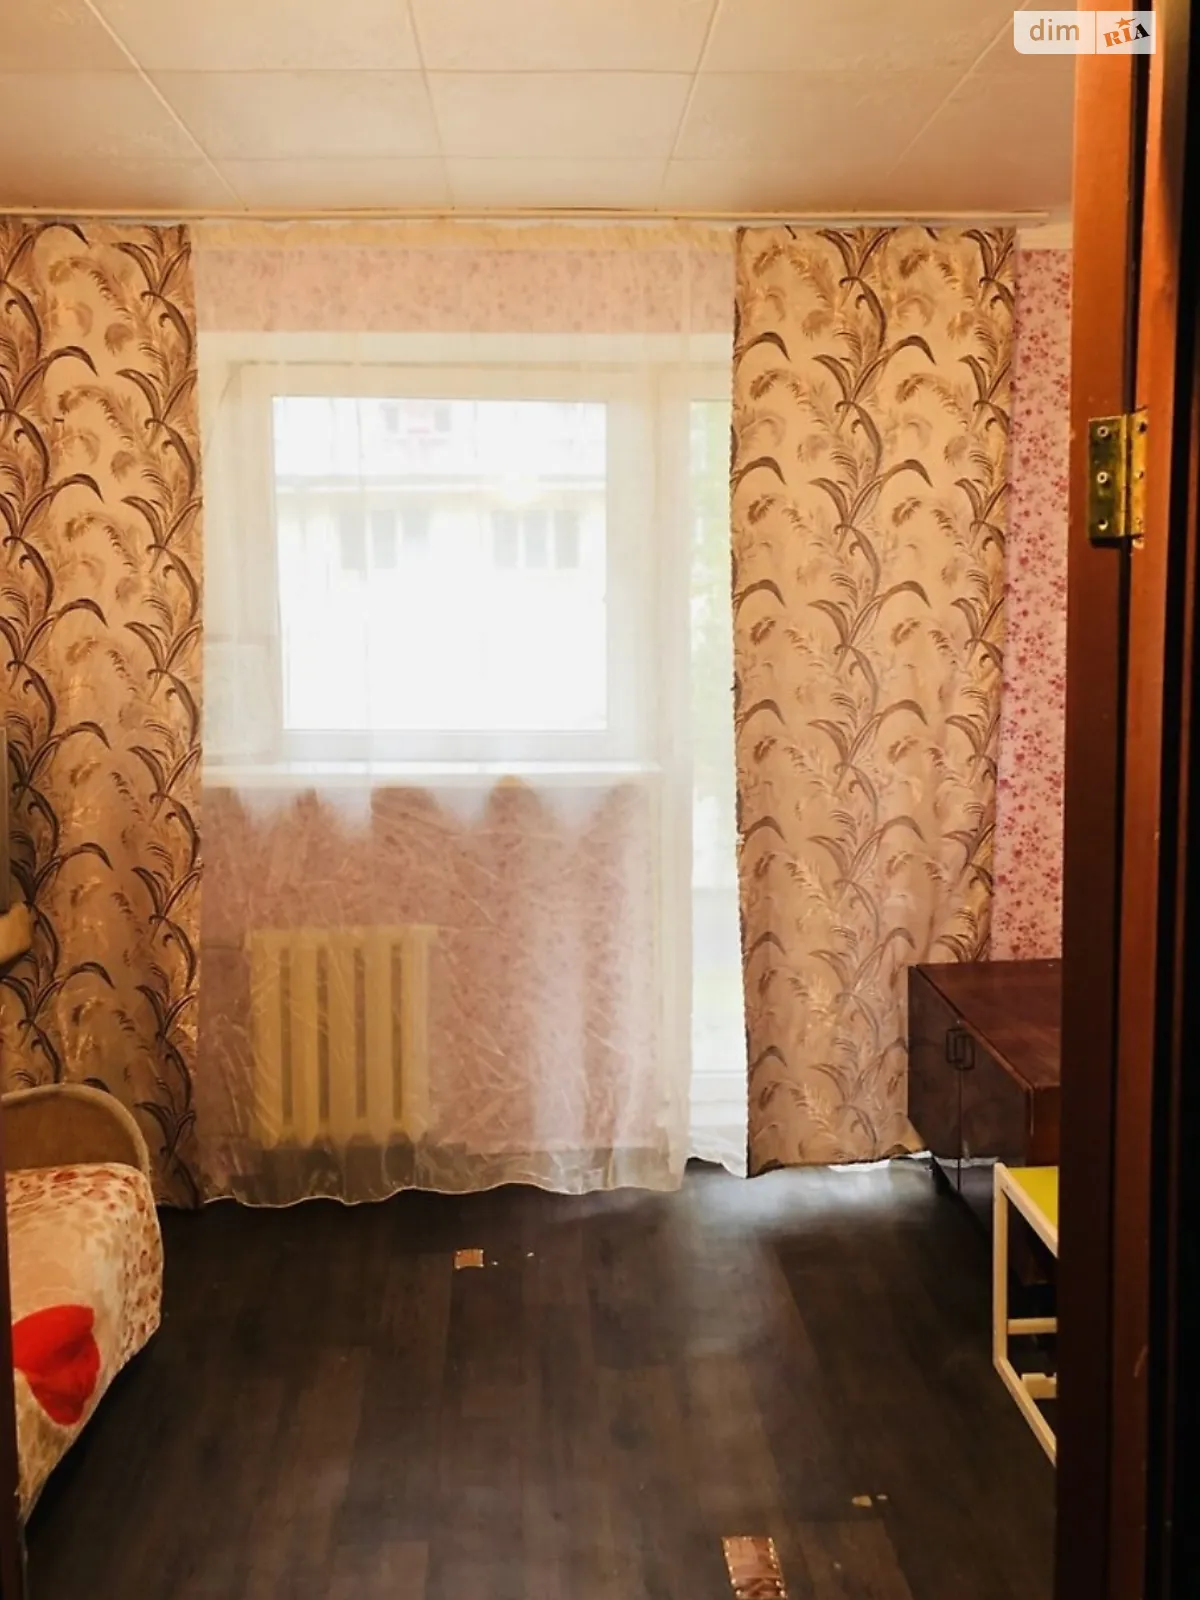 Продается комната 37 кв. м в Одессе, цена: 13500 $ - фото 1